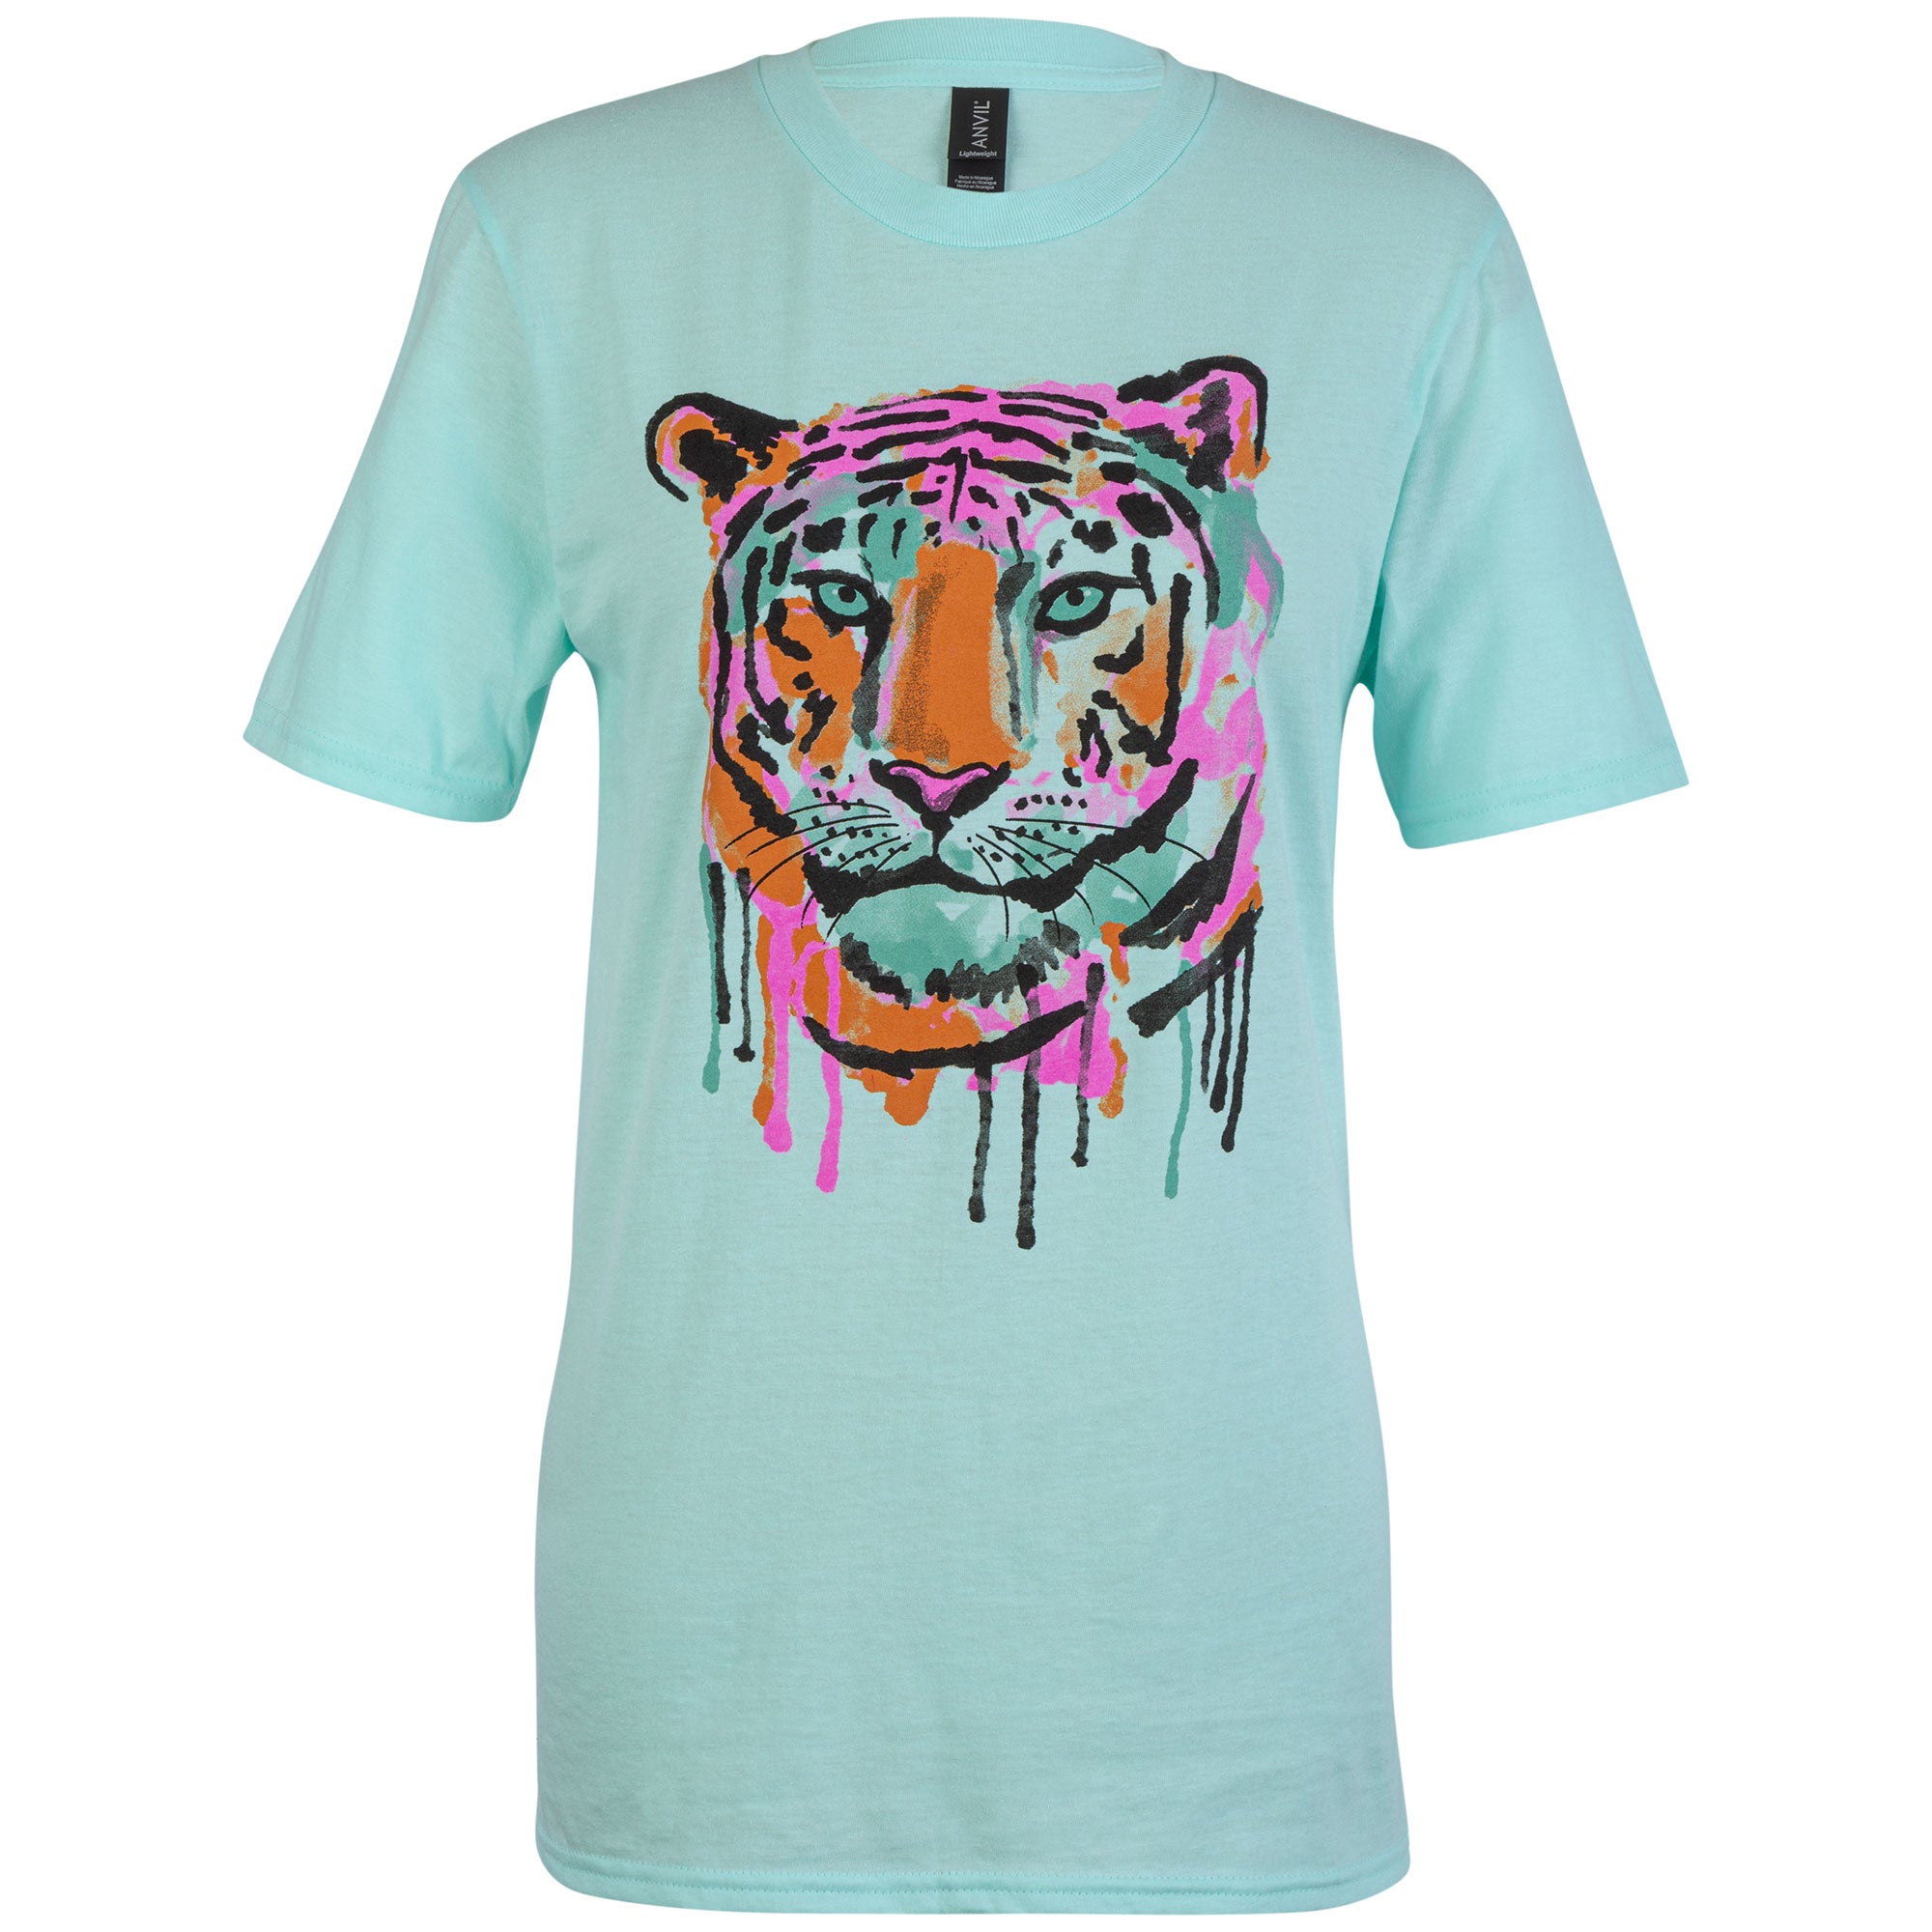 Painted Tiger T-Shirt - XXL